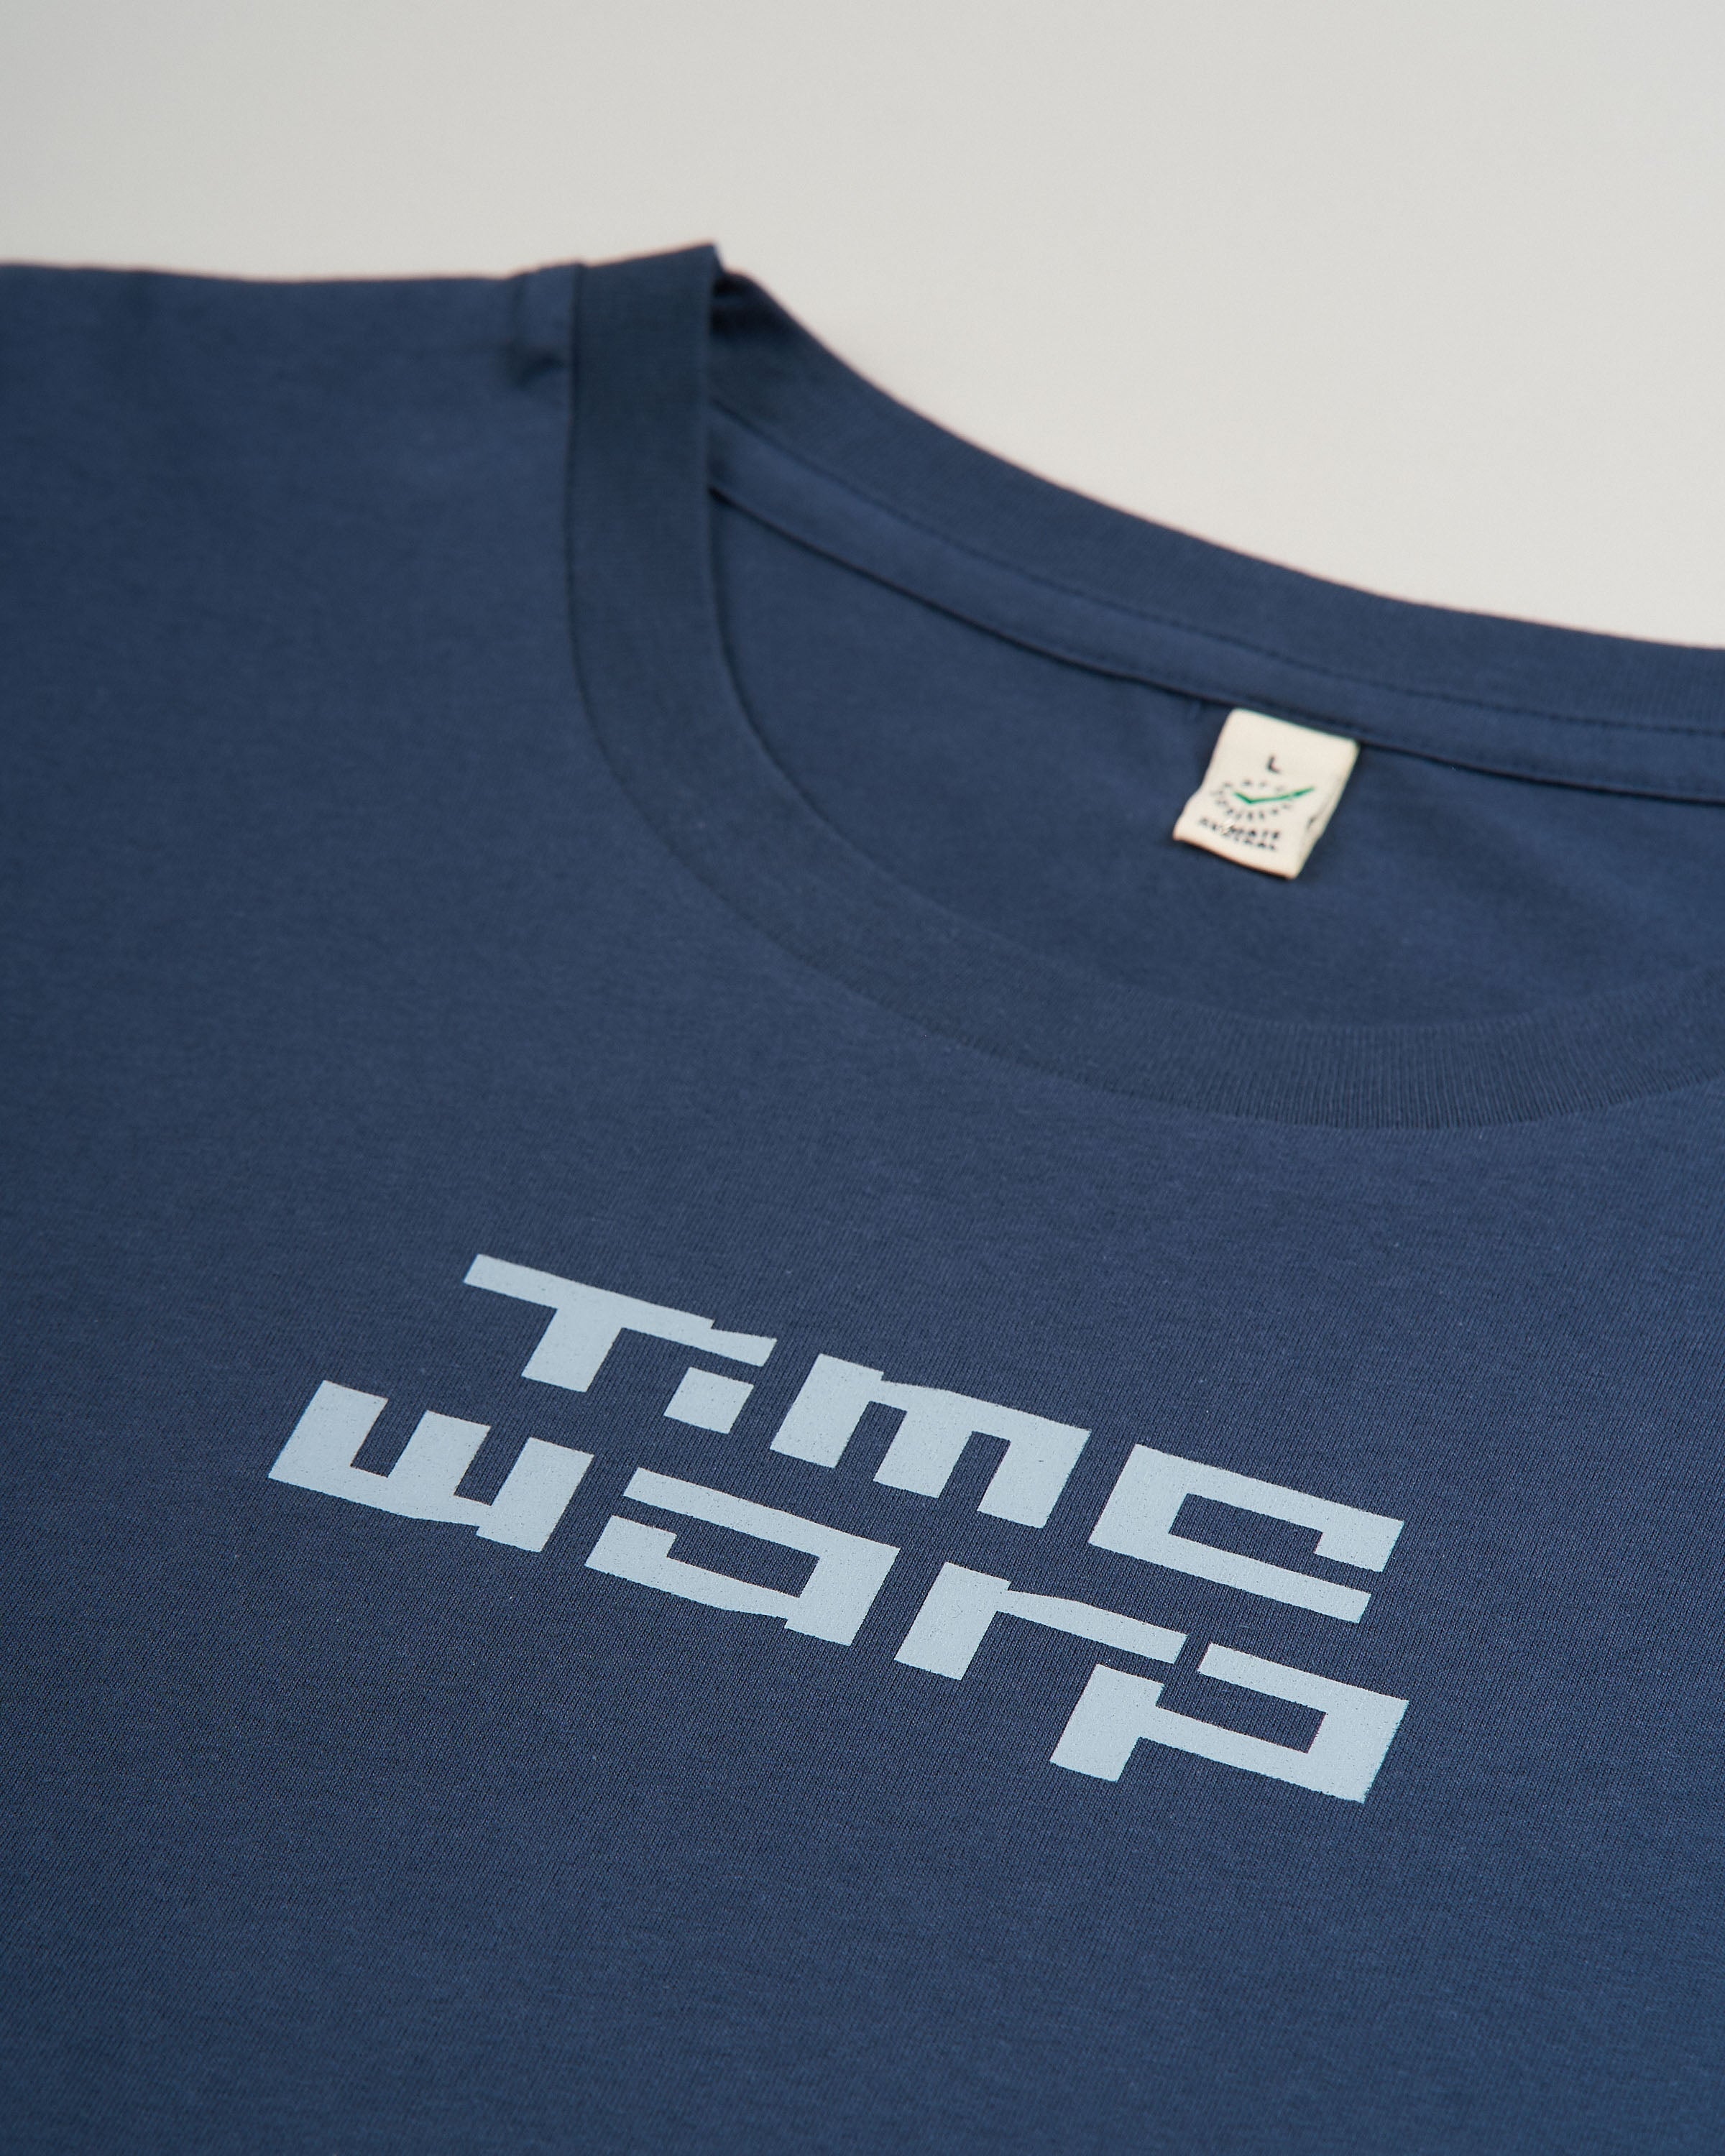 Time Warp Fan Shirt, denim blue